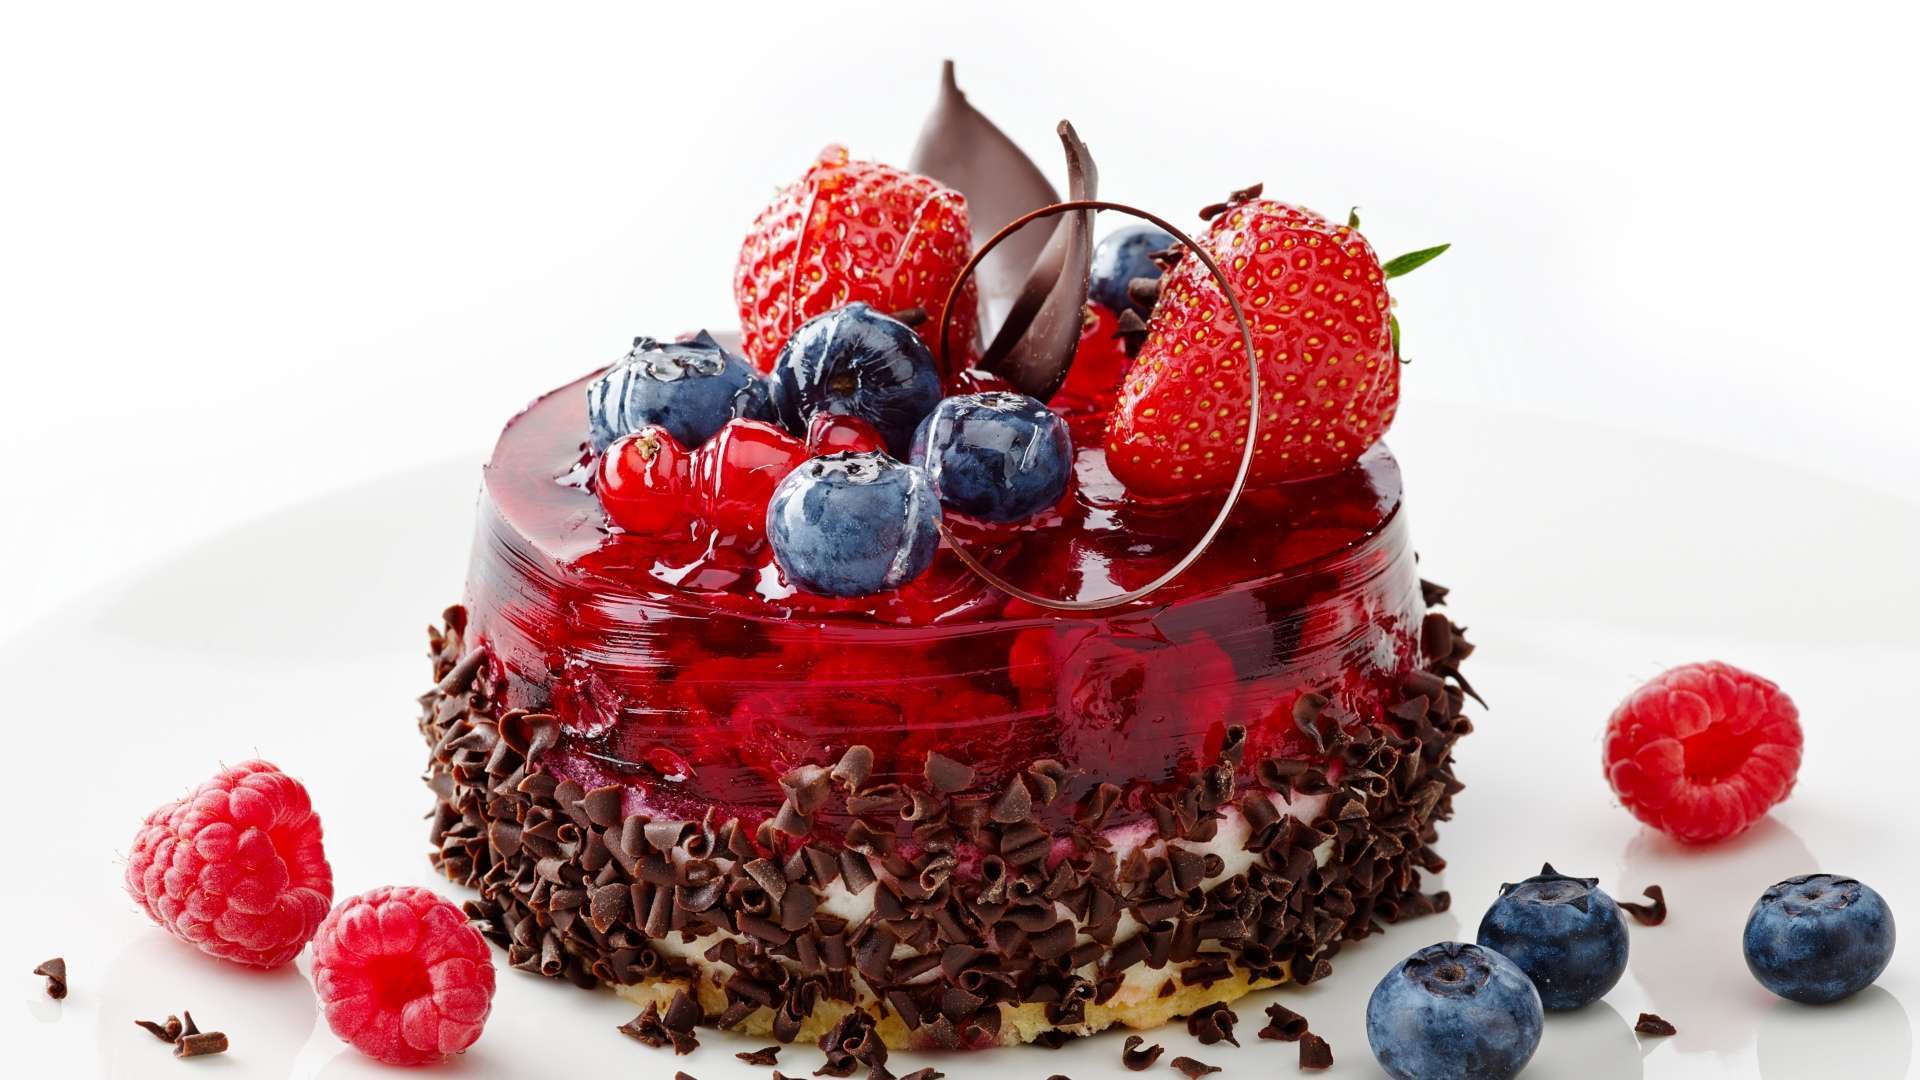 Bluey Birthday cake – Klein's Bakery & Café